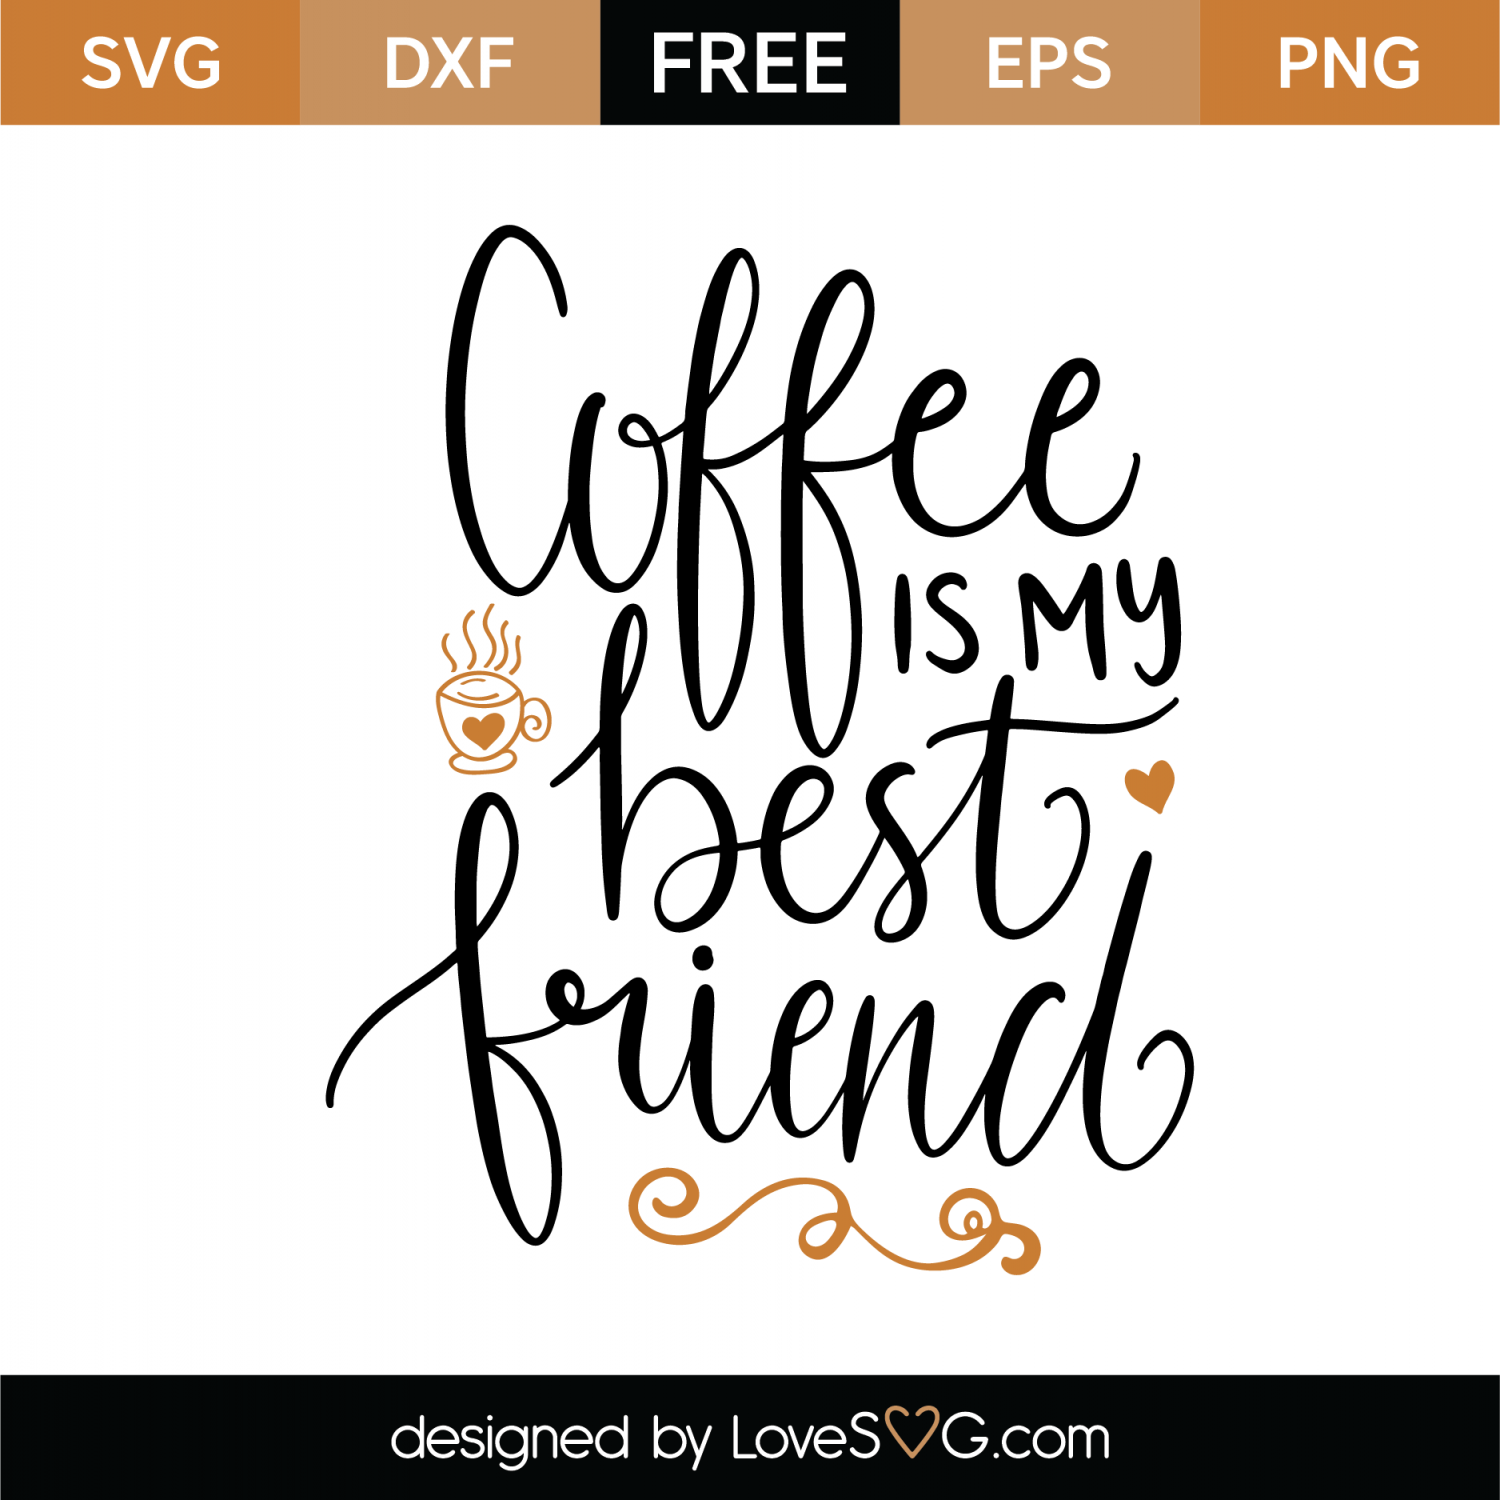 Download Free Coffee Is My Best Friend SVG Cut File | Lovesvg.com